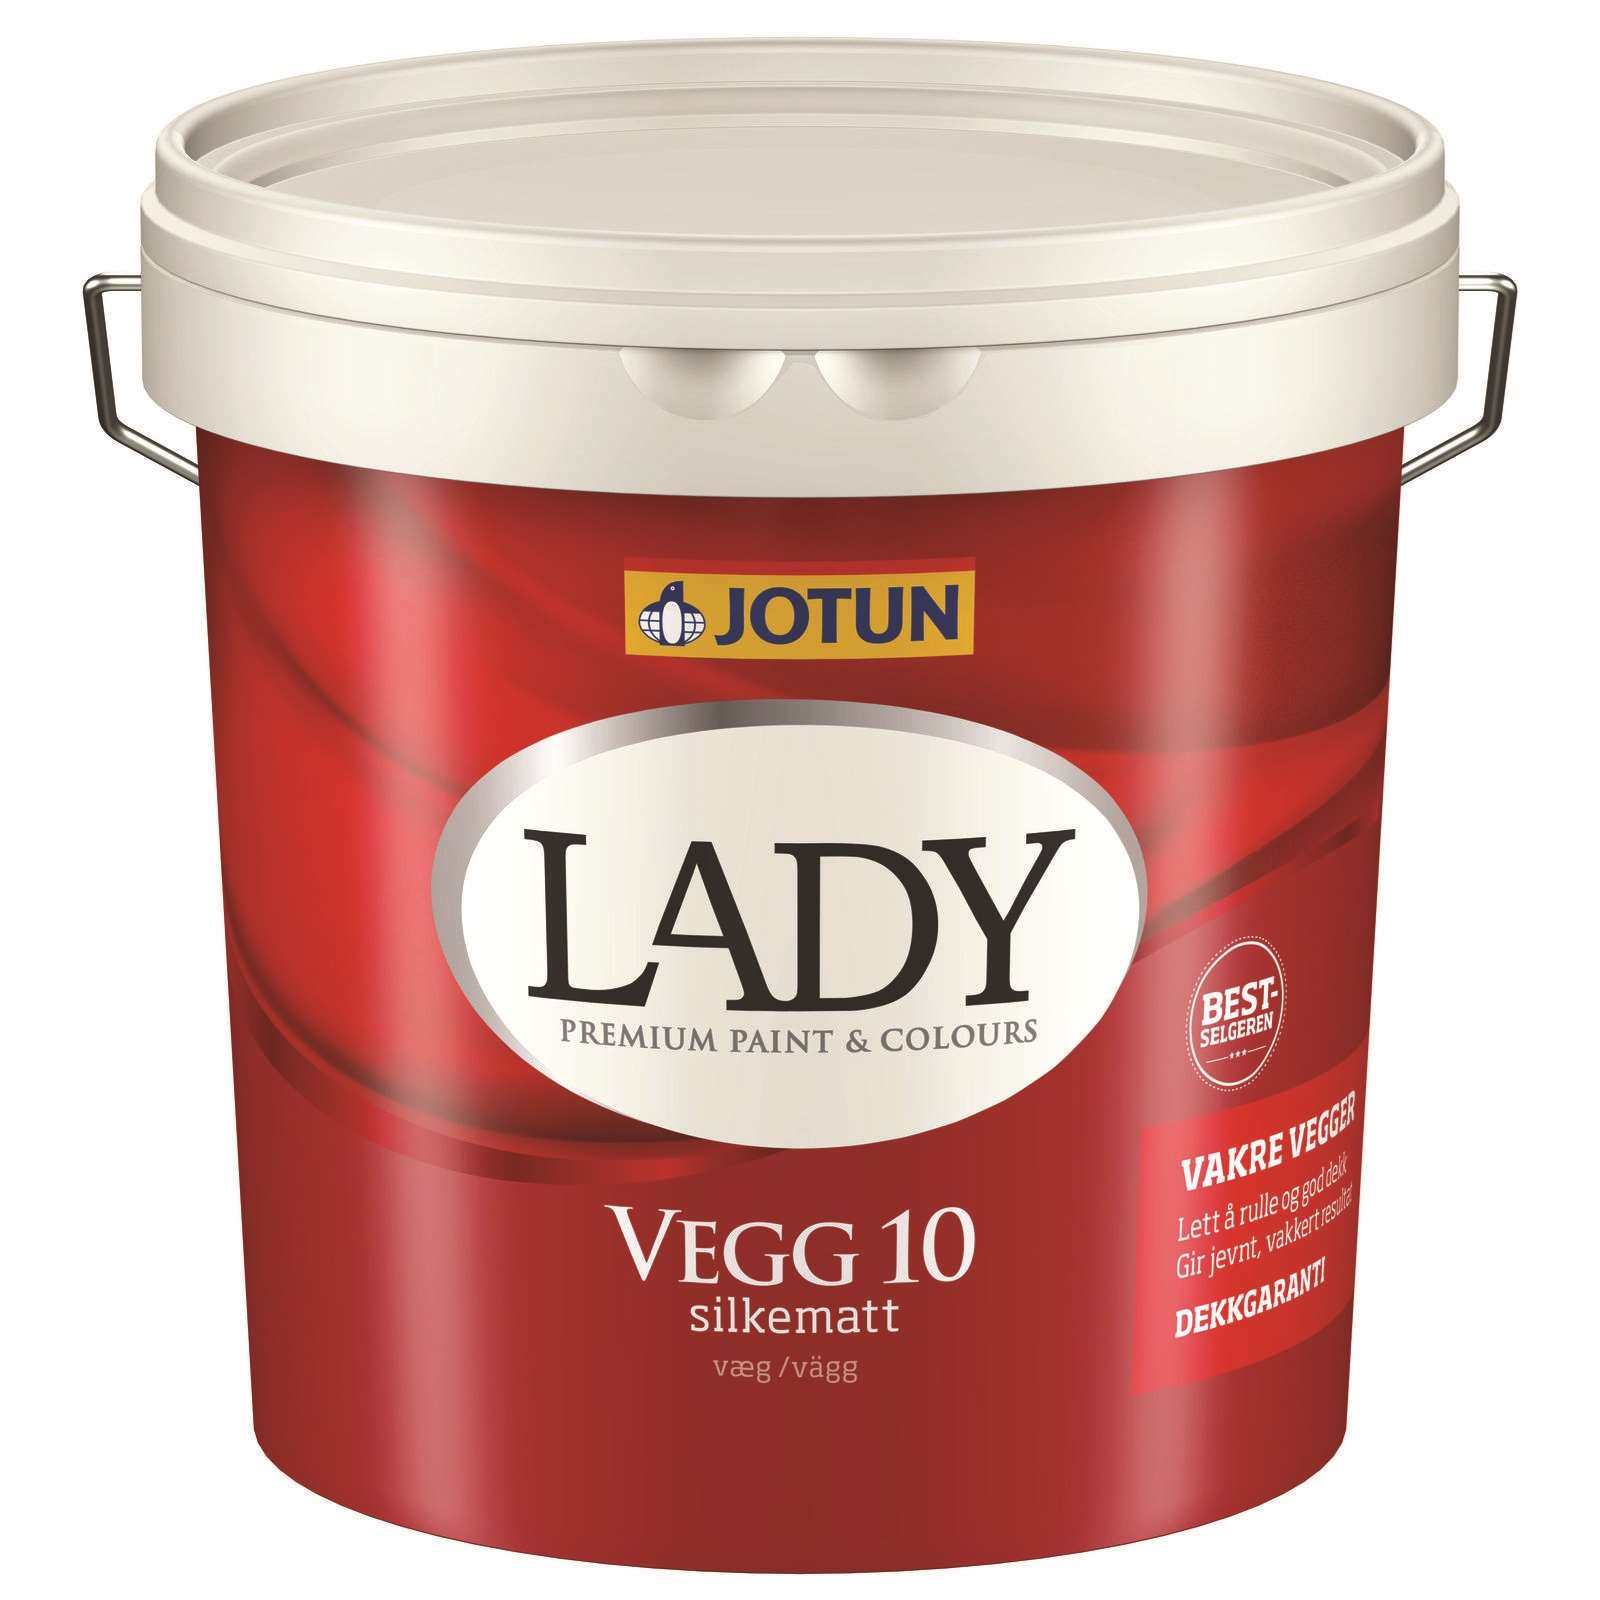 lady vegg 10 3 l ny-medium